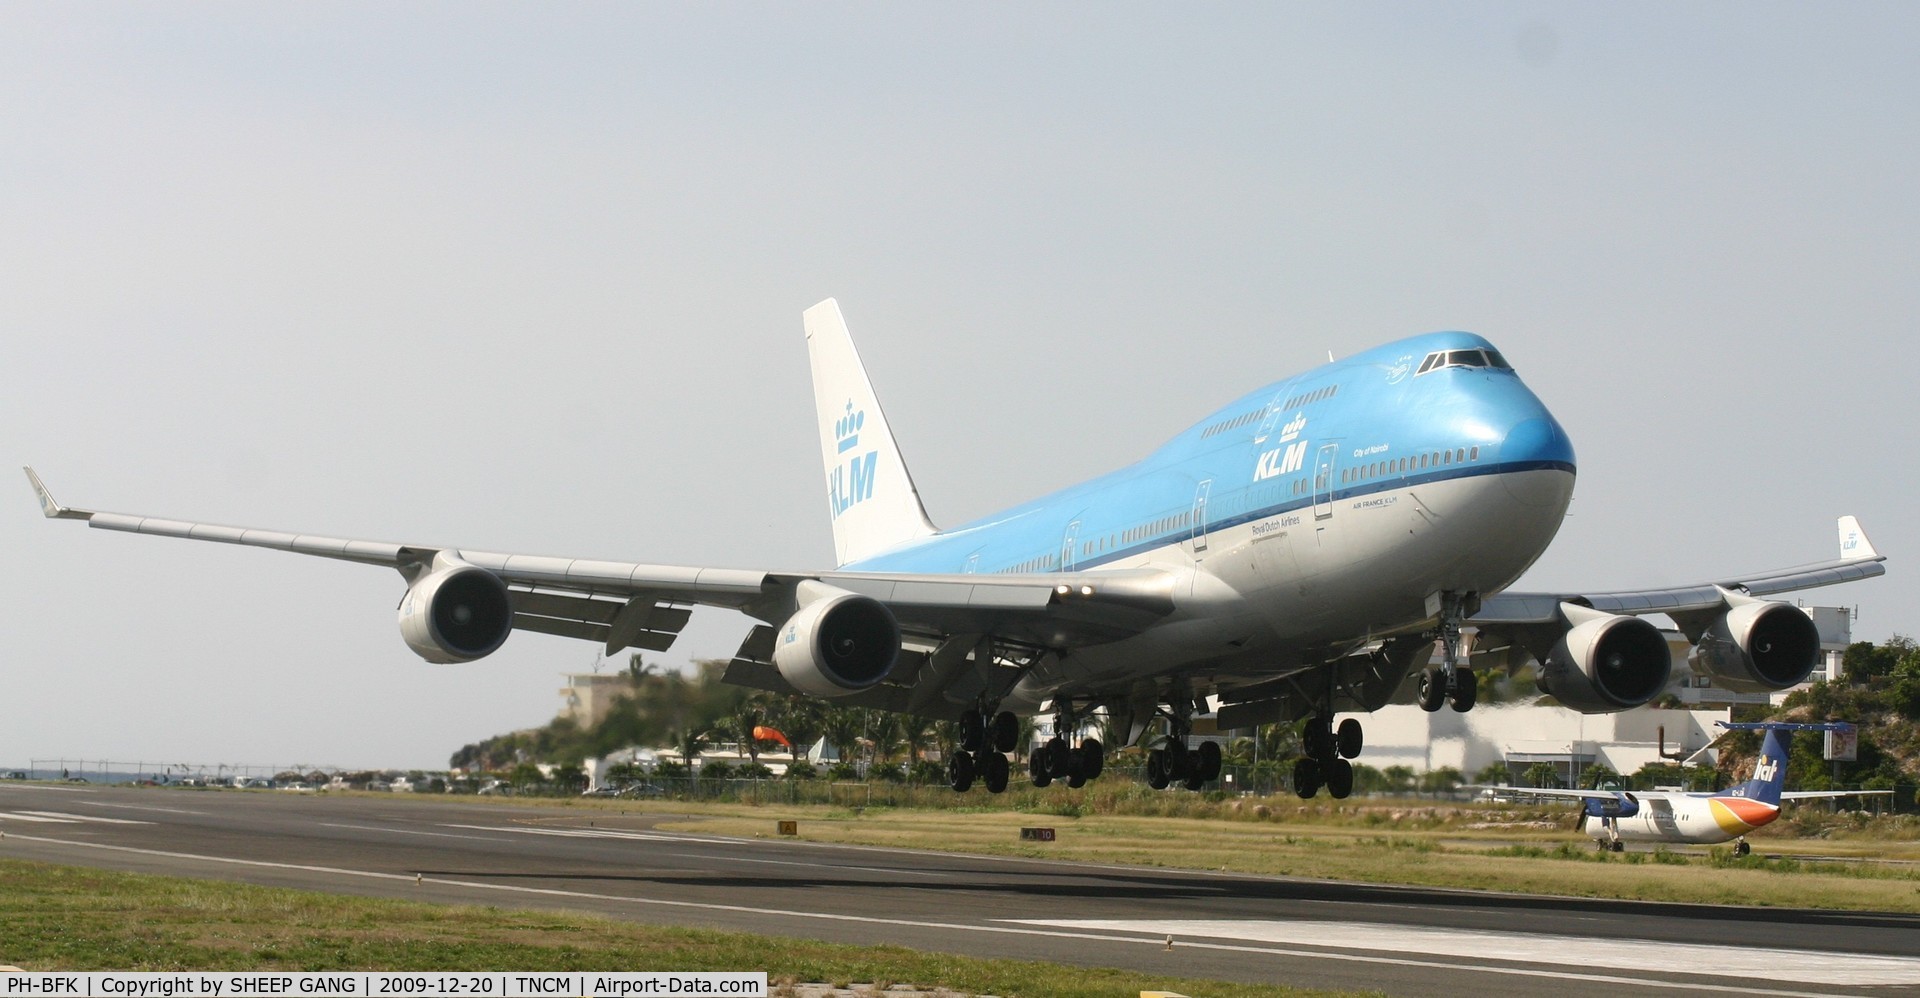 PH-BFK, 1991 Boeing 747-406BC C/N 25087, KLM landing at TNCM